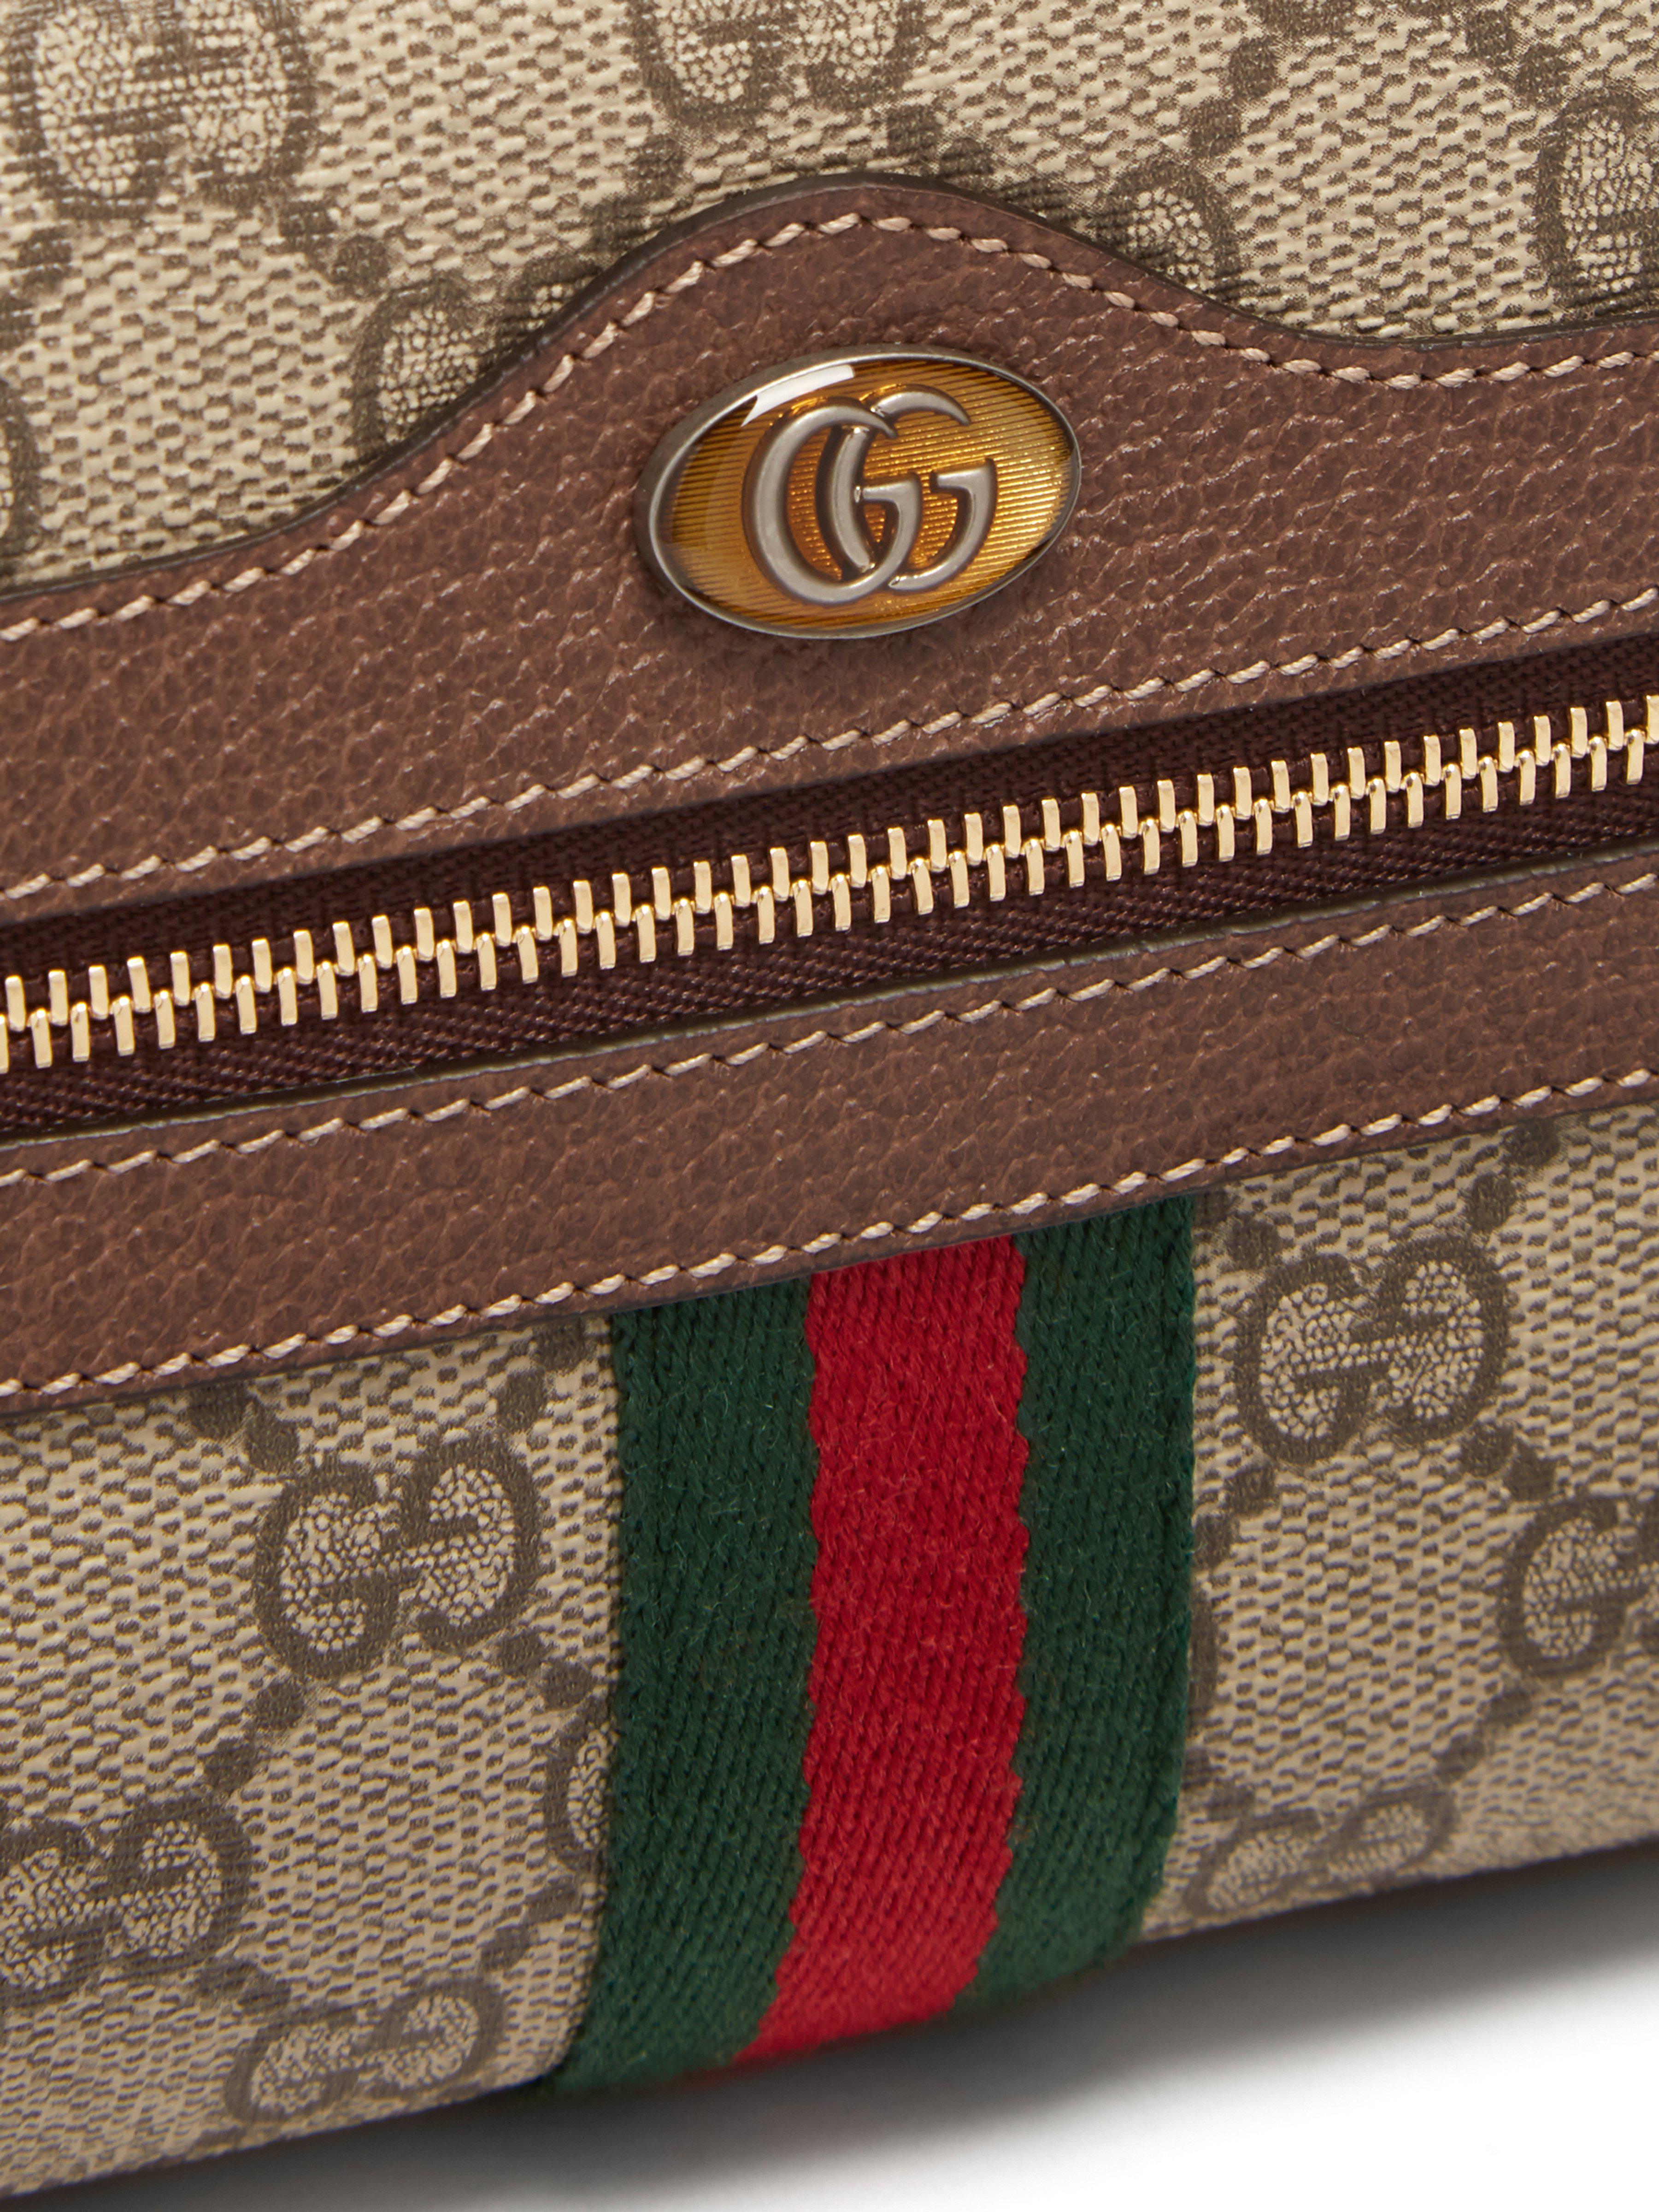 Gucci Ophidia Gg Supreme Cross Body Mini Bag in Brown - Lyst